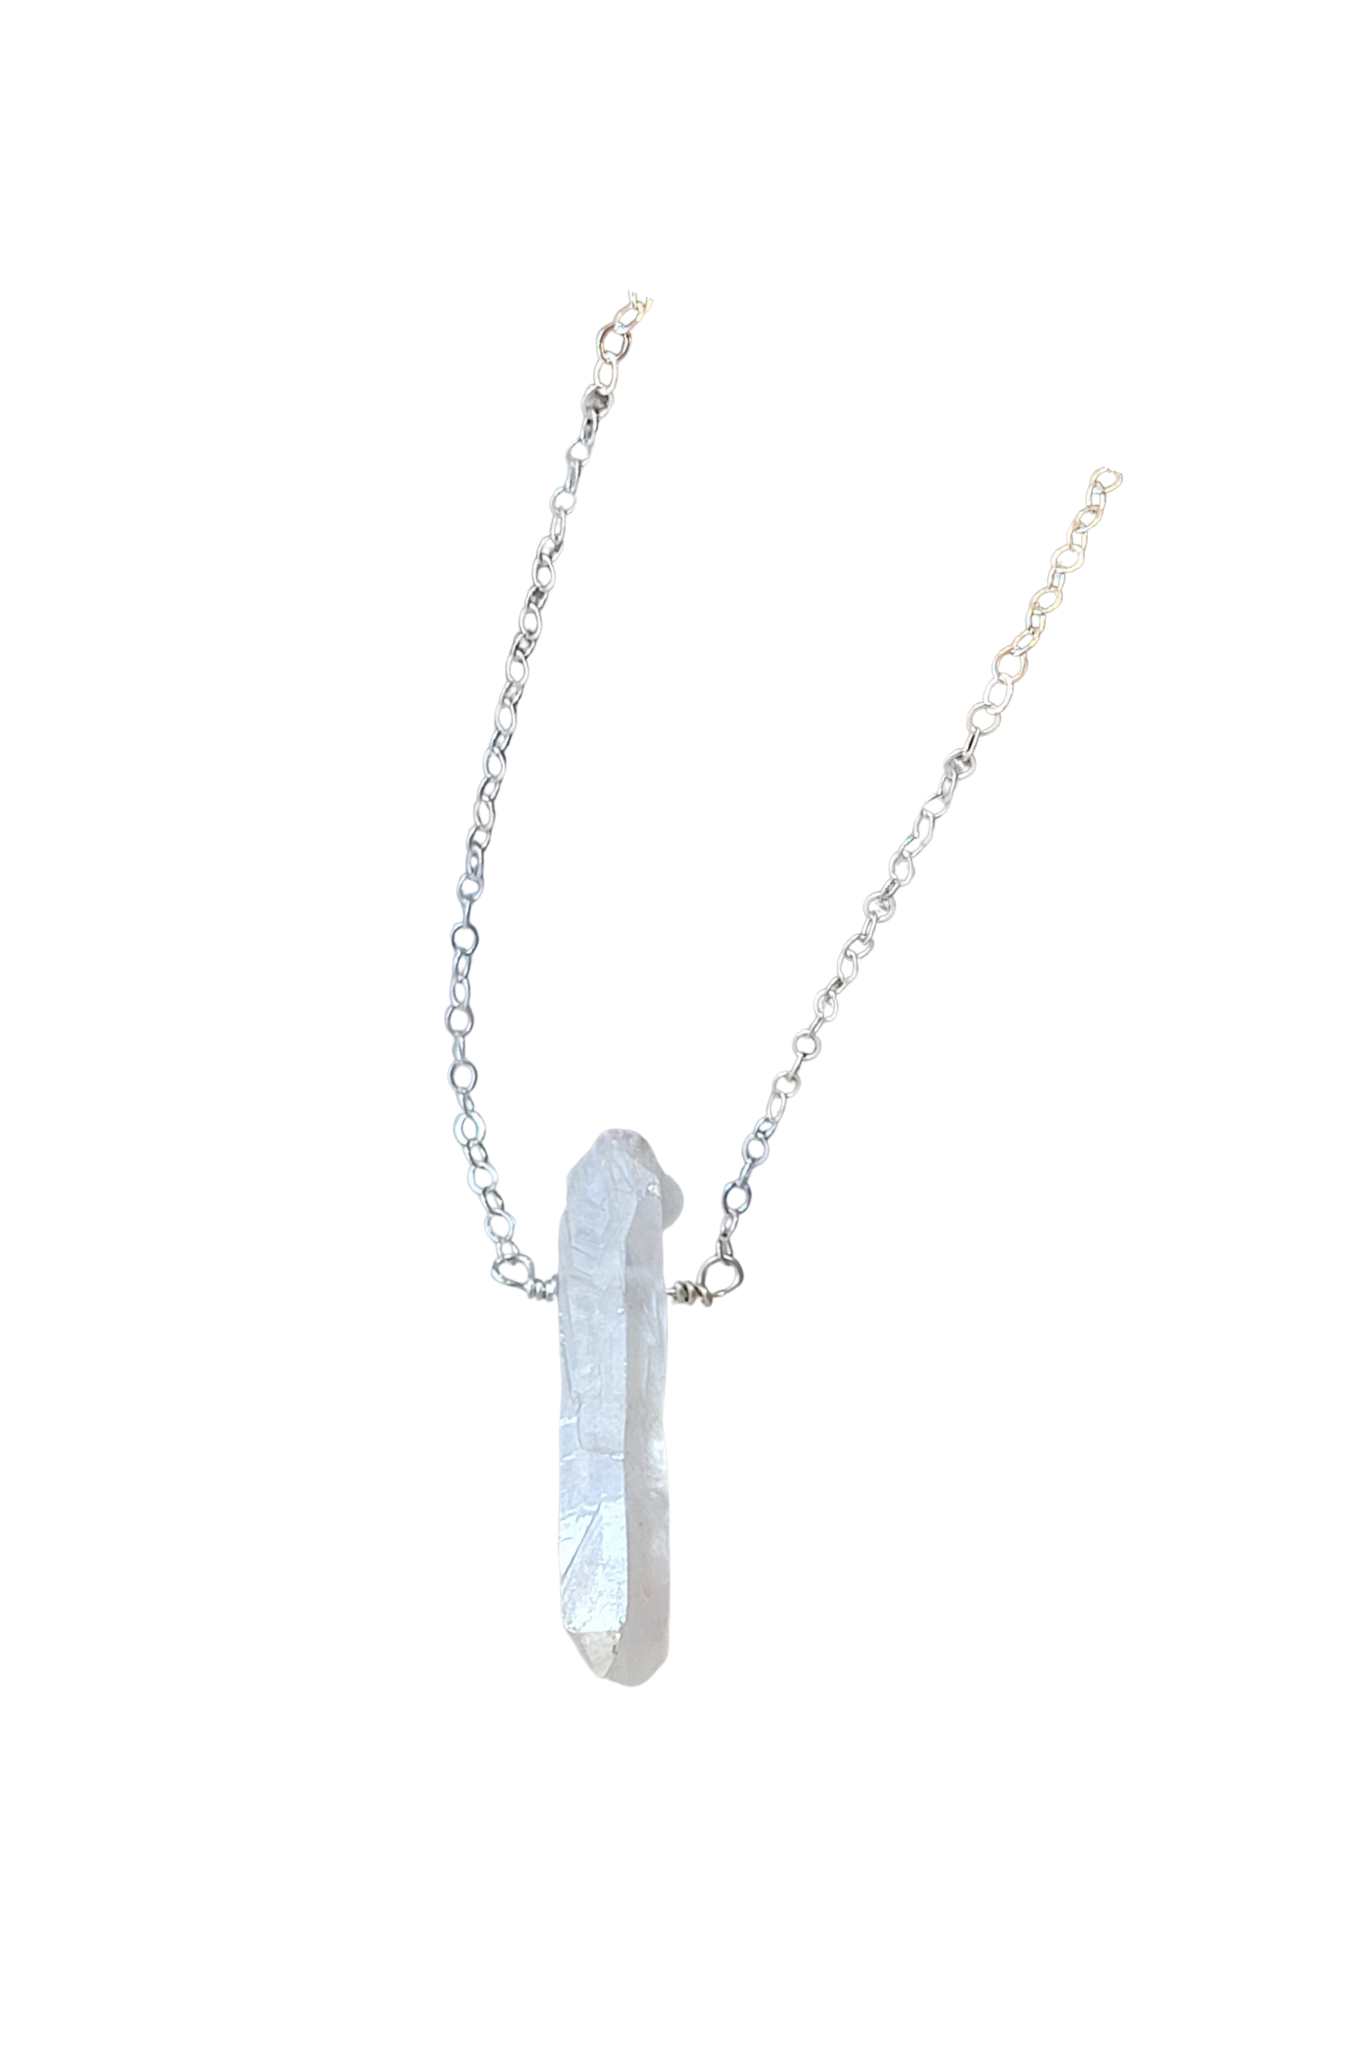 Single Raw Rainbow Quartz Crystal Pendant Necklace in Silver